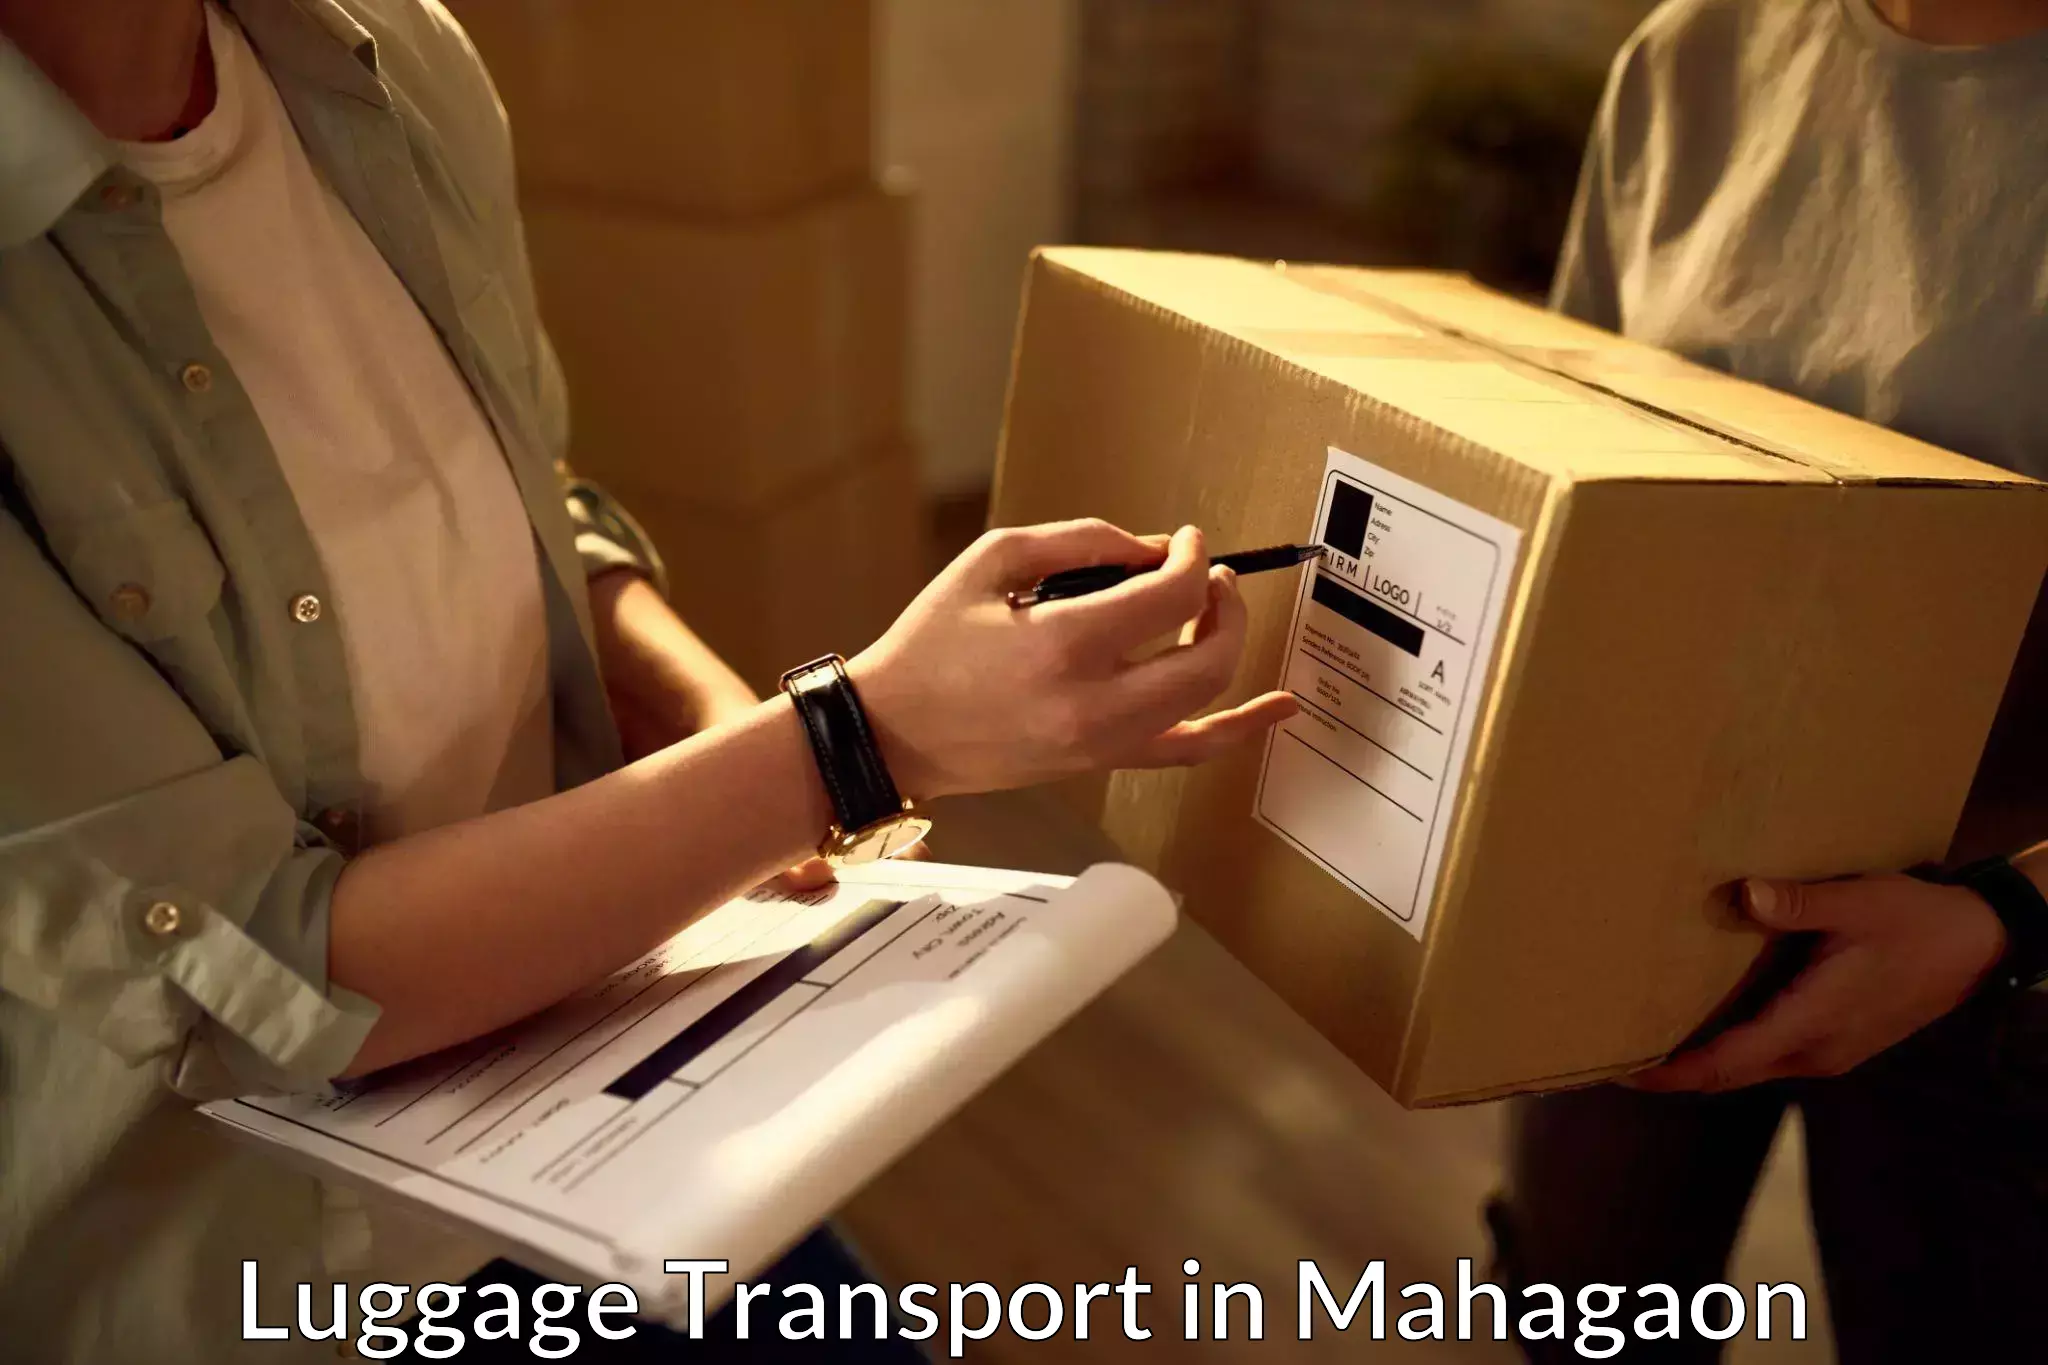 Luggage transfer service in Mahagaon